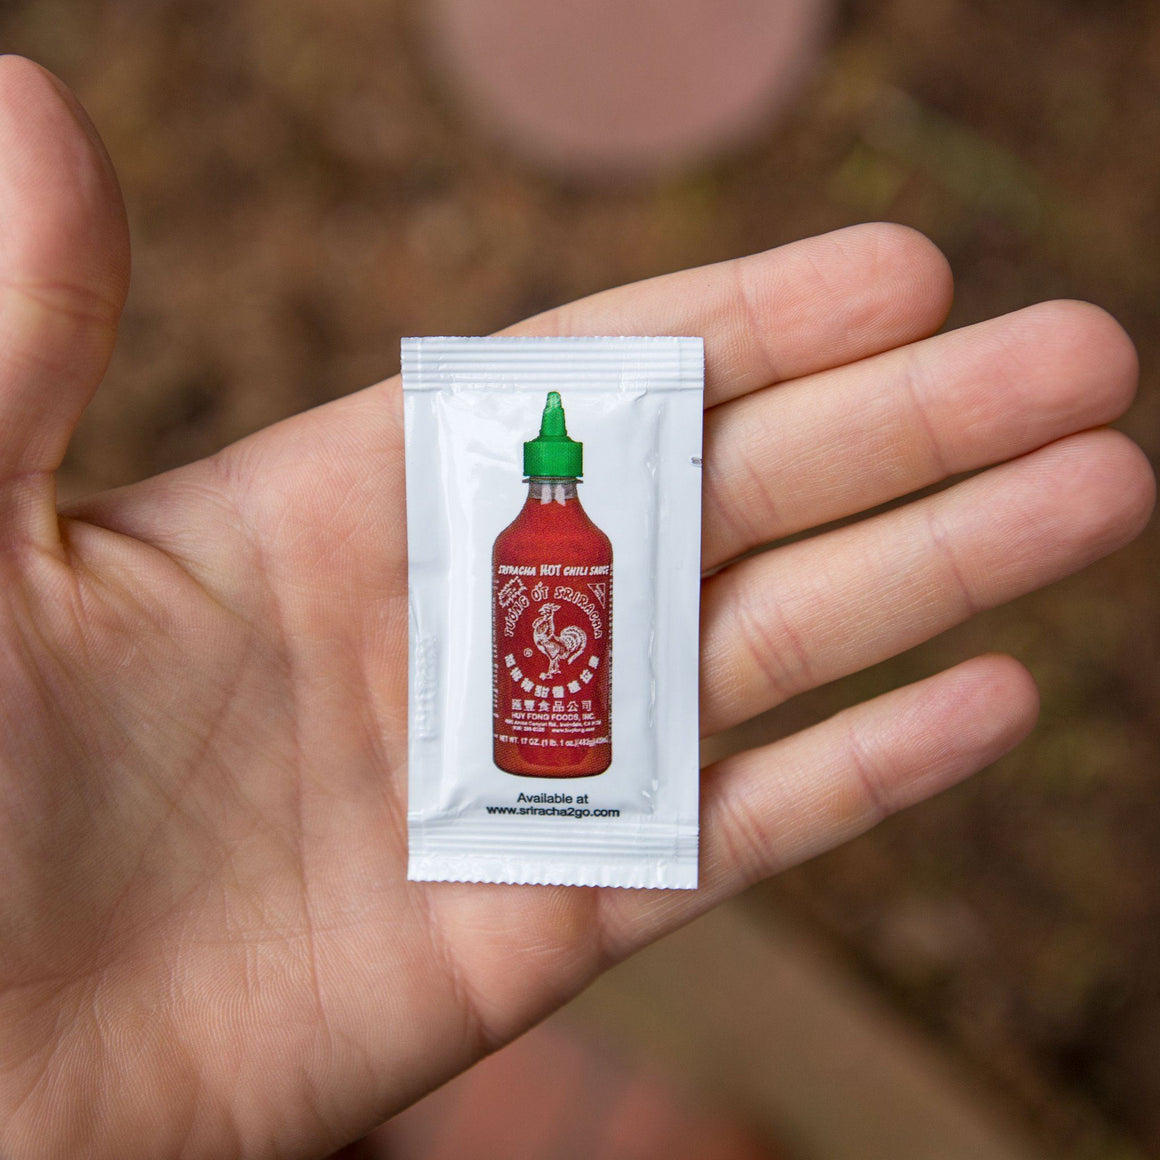 Food - Huy Fong Sriracha Packets